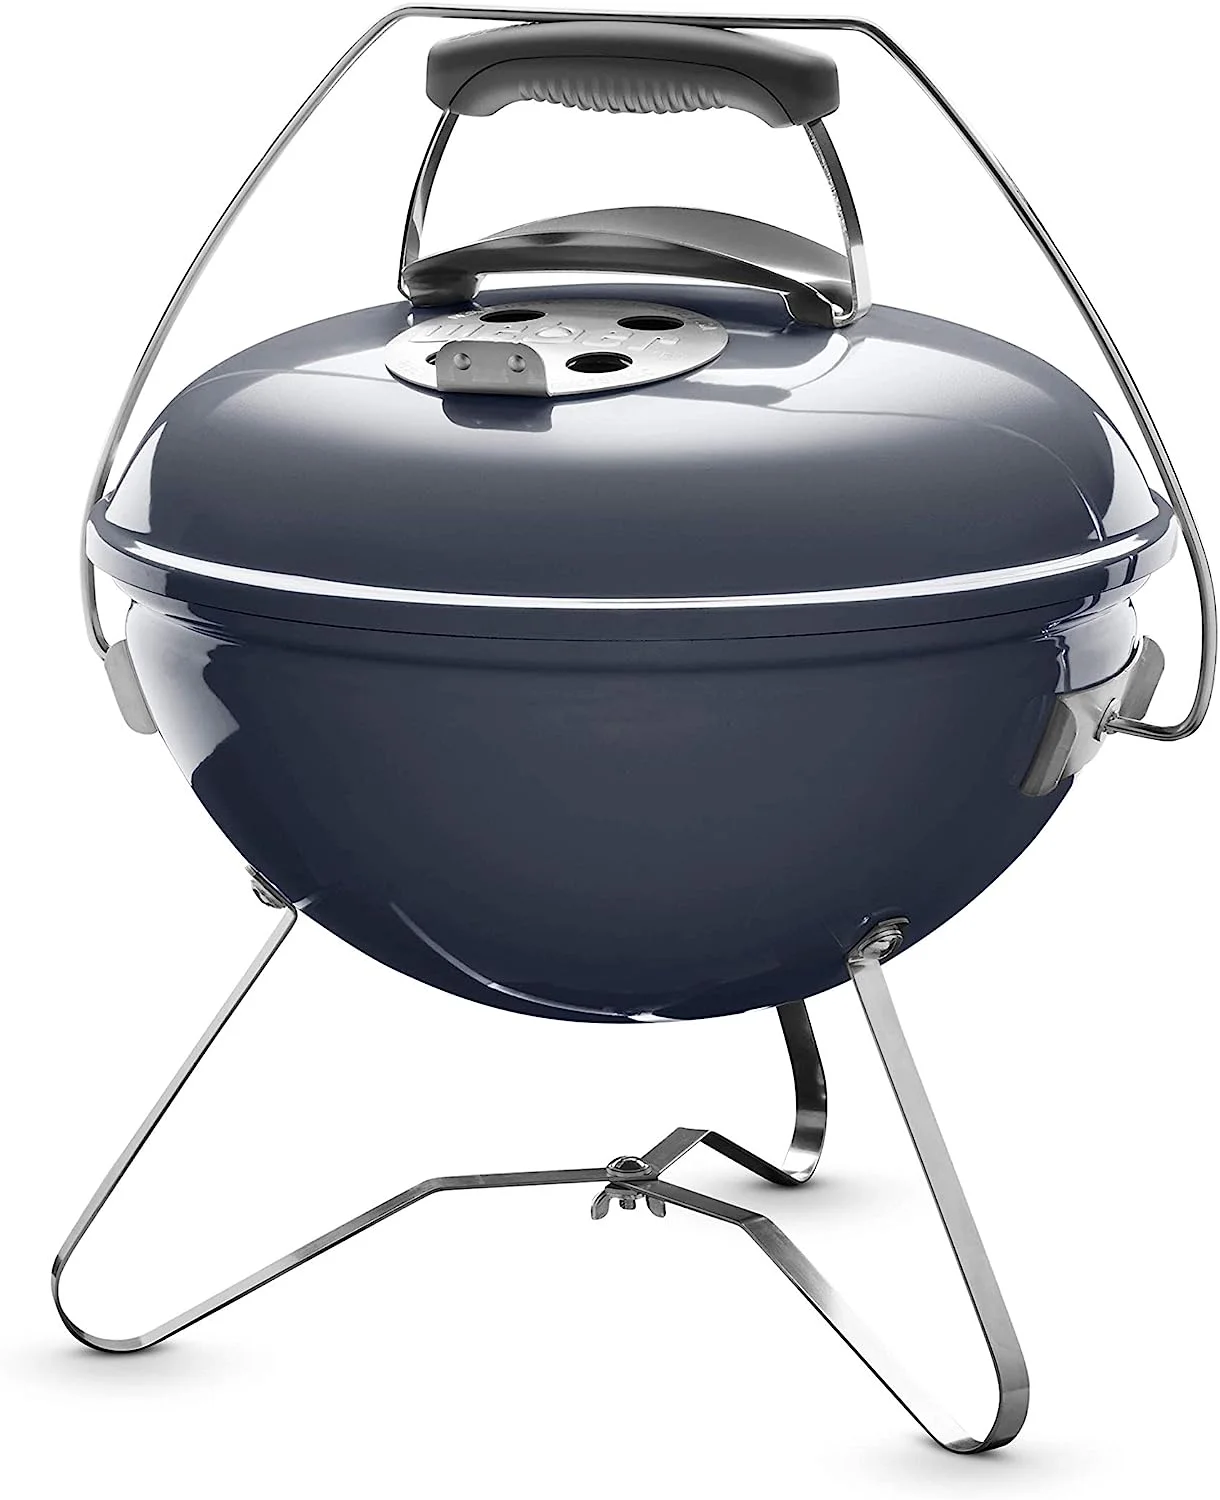 Image of Weber Smokey Joe Premium Charcoal Grill